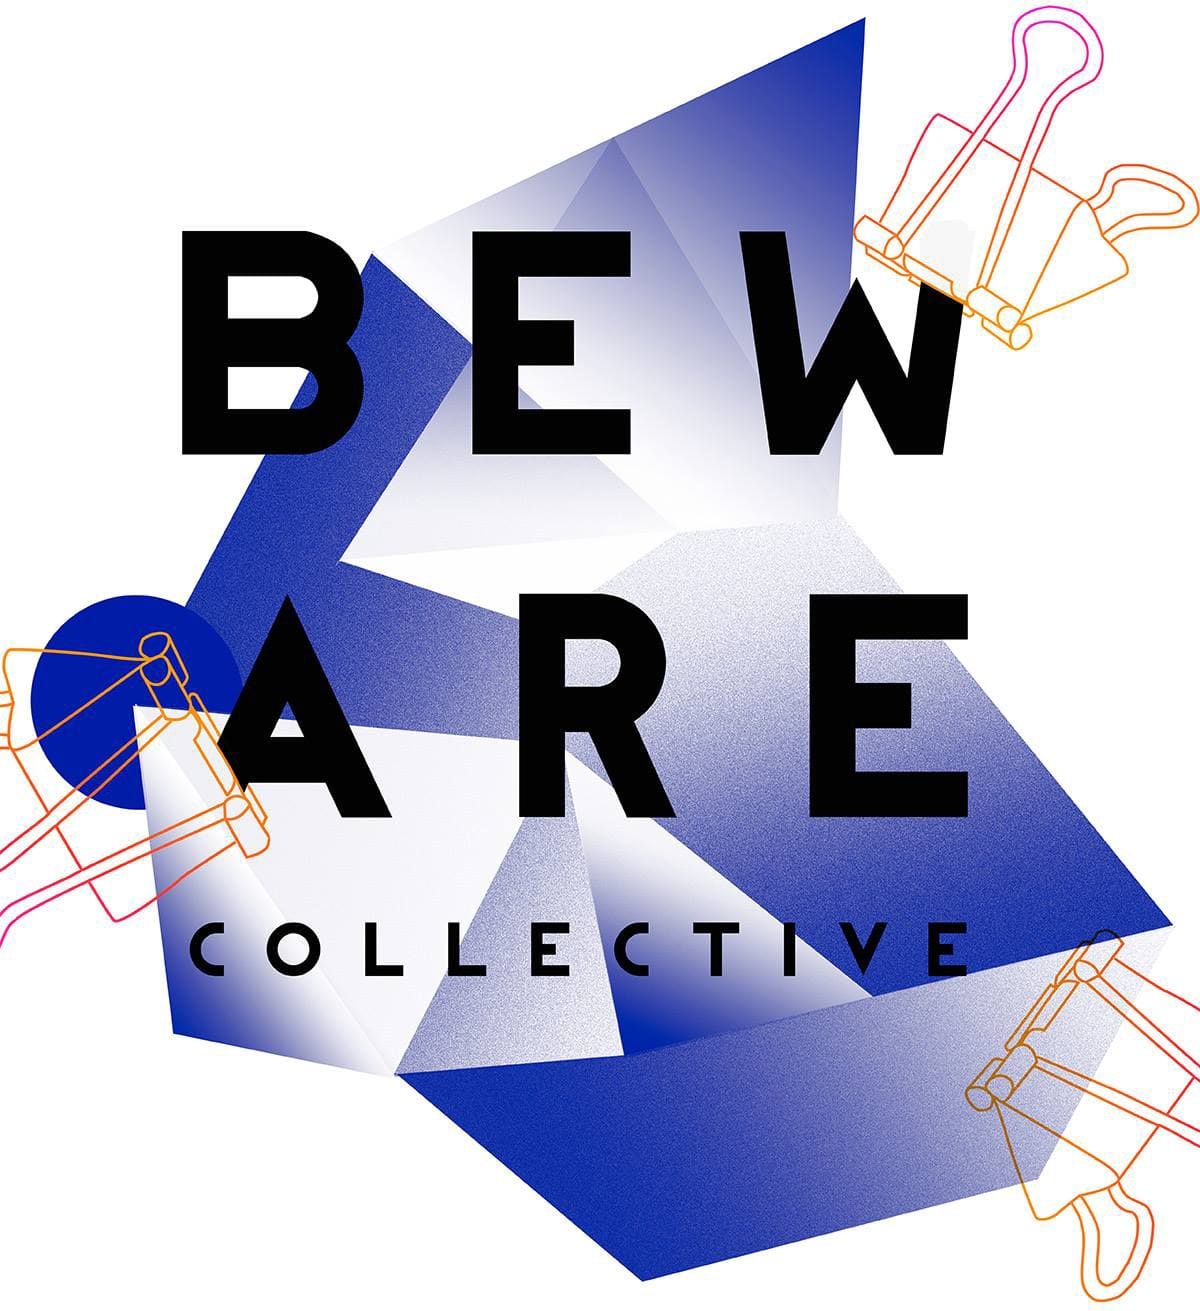 Beware Collective investit le Batofar le mardi 15 juillet 2014 ! 4